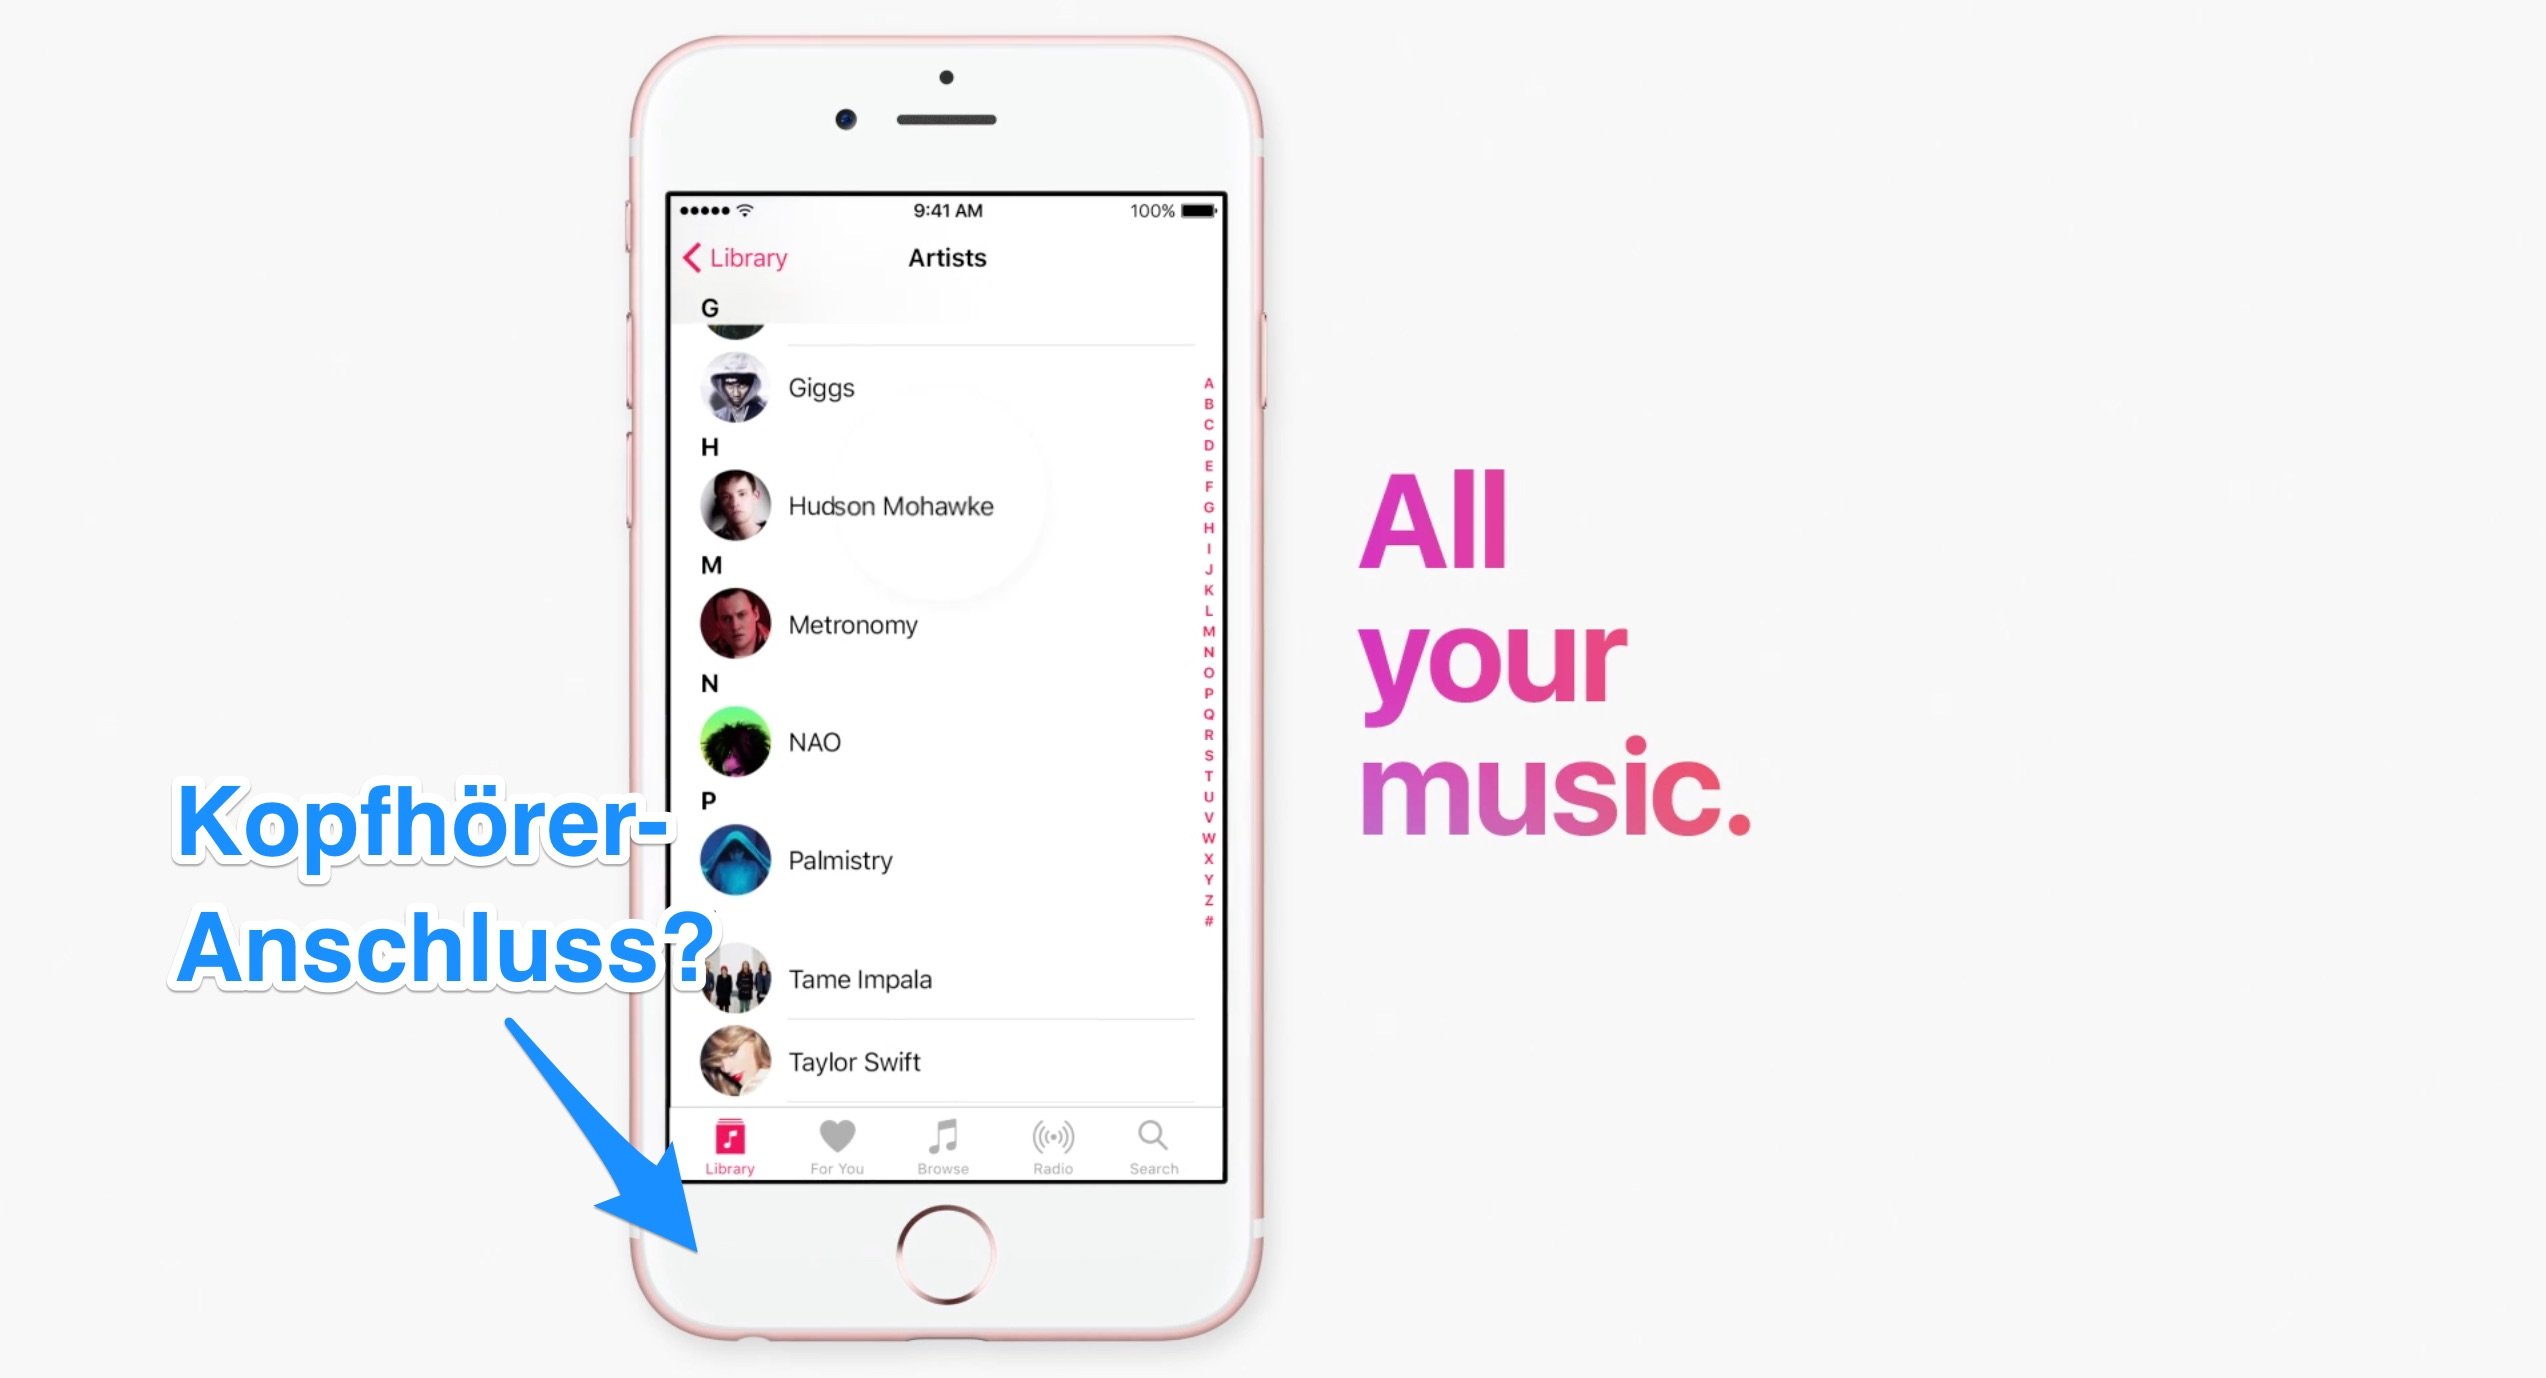 Neuer Apple Music Werbeclip featured iPhone 6s statt iPhone 7? 1